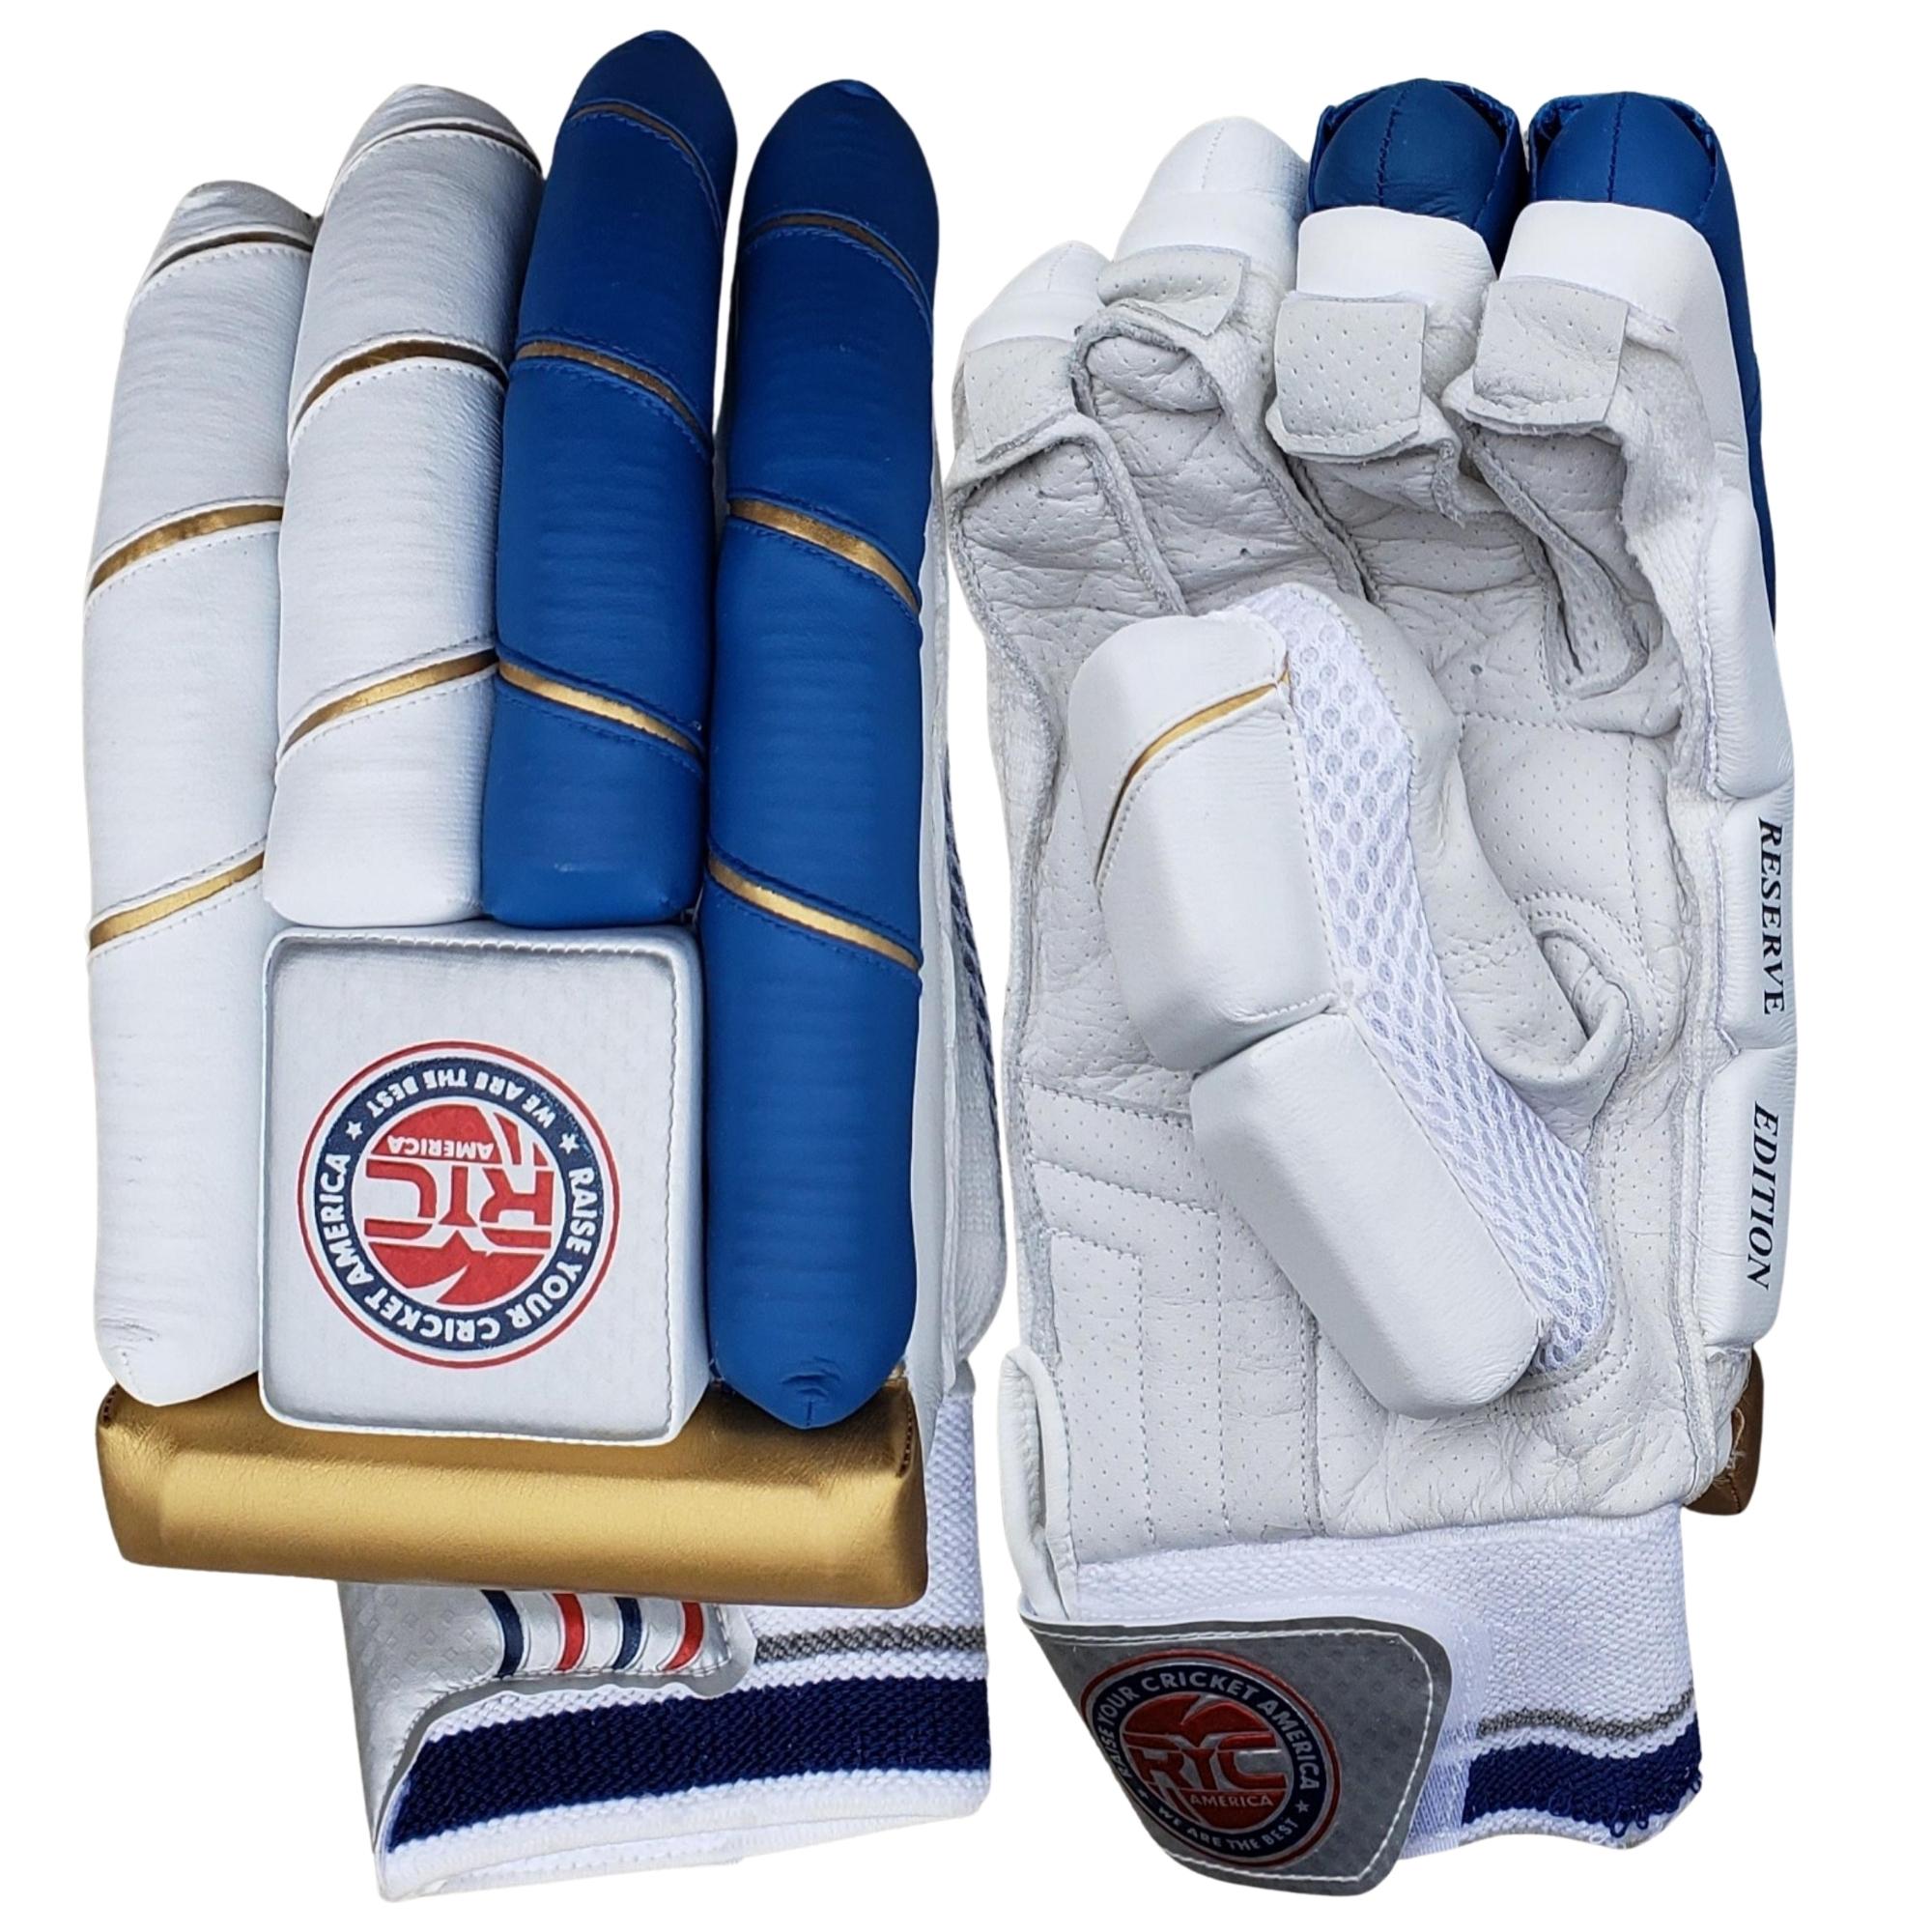 Zee Sports Batting Gloves Reserve Edition